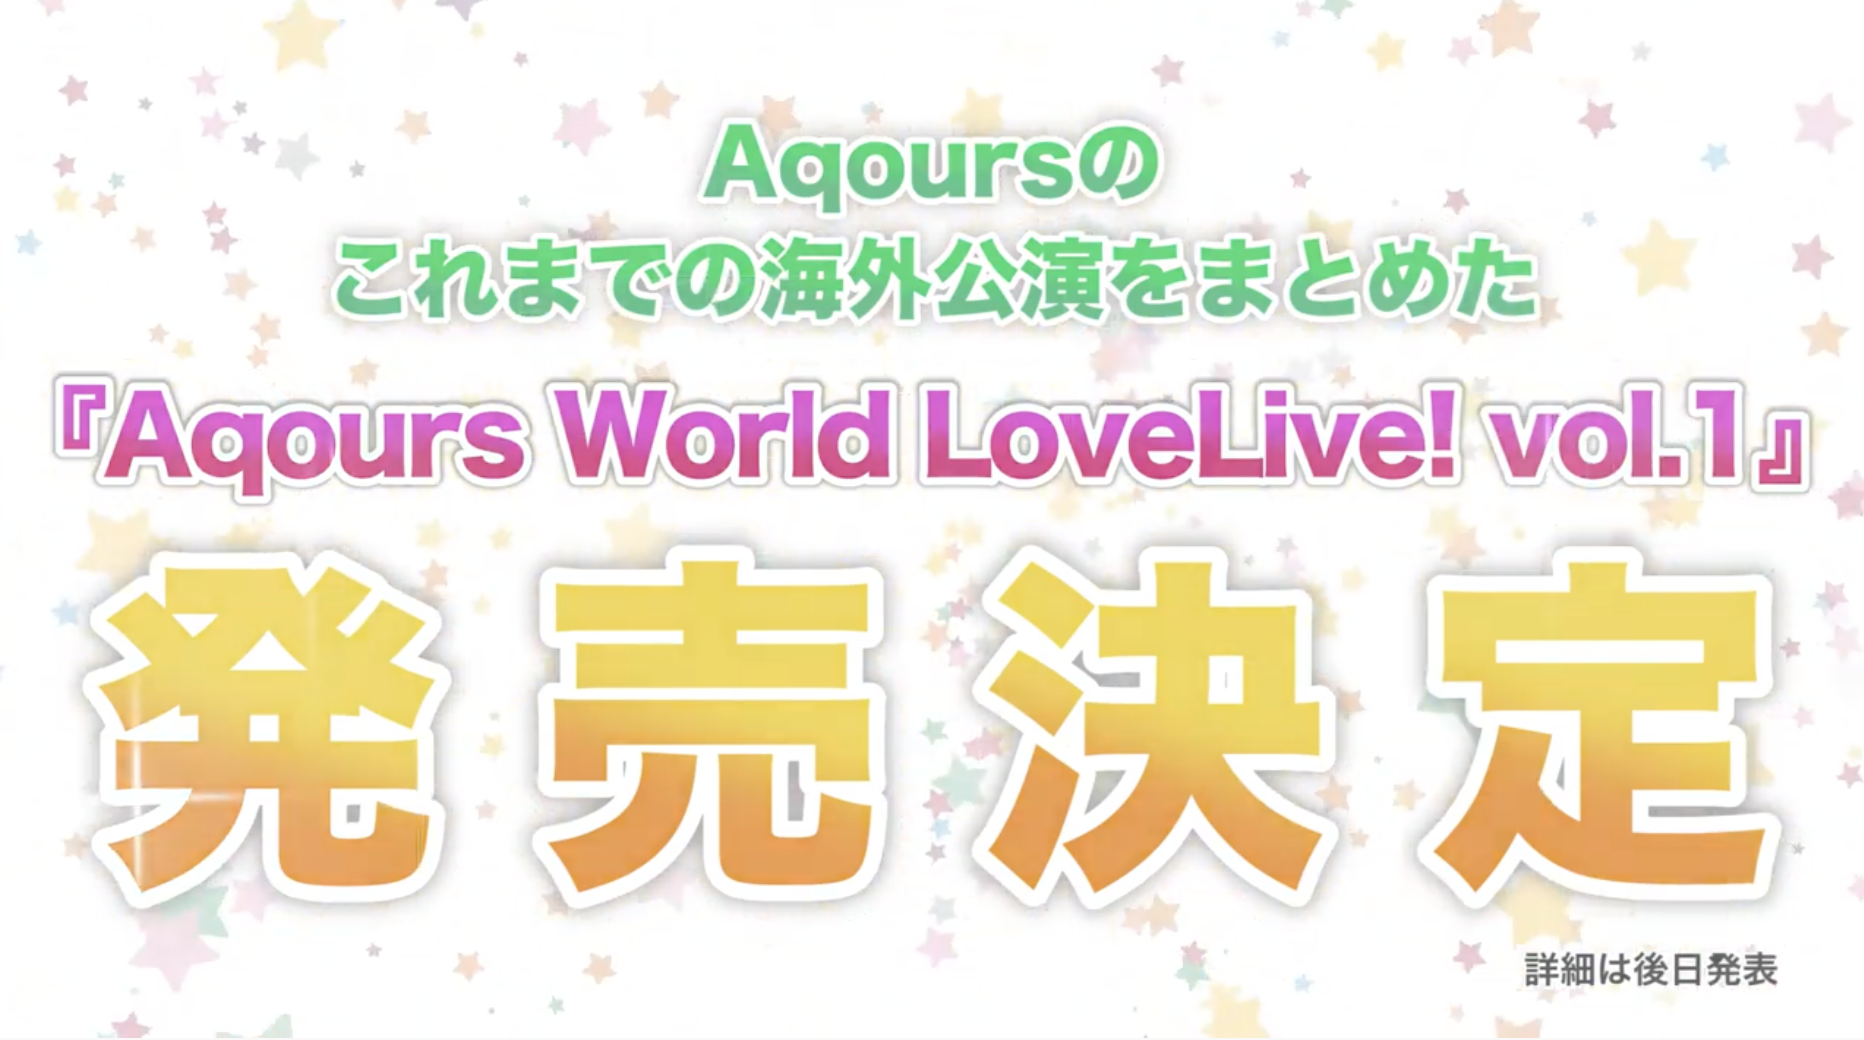 Aqours 海外ライブBD「Aqours World LoveLive! vol.1」の予約・特典